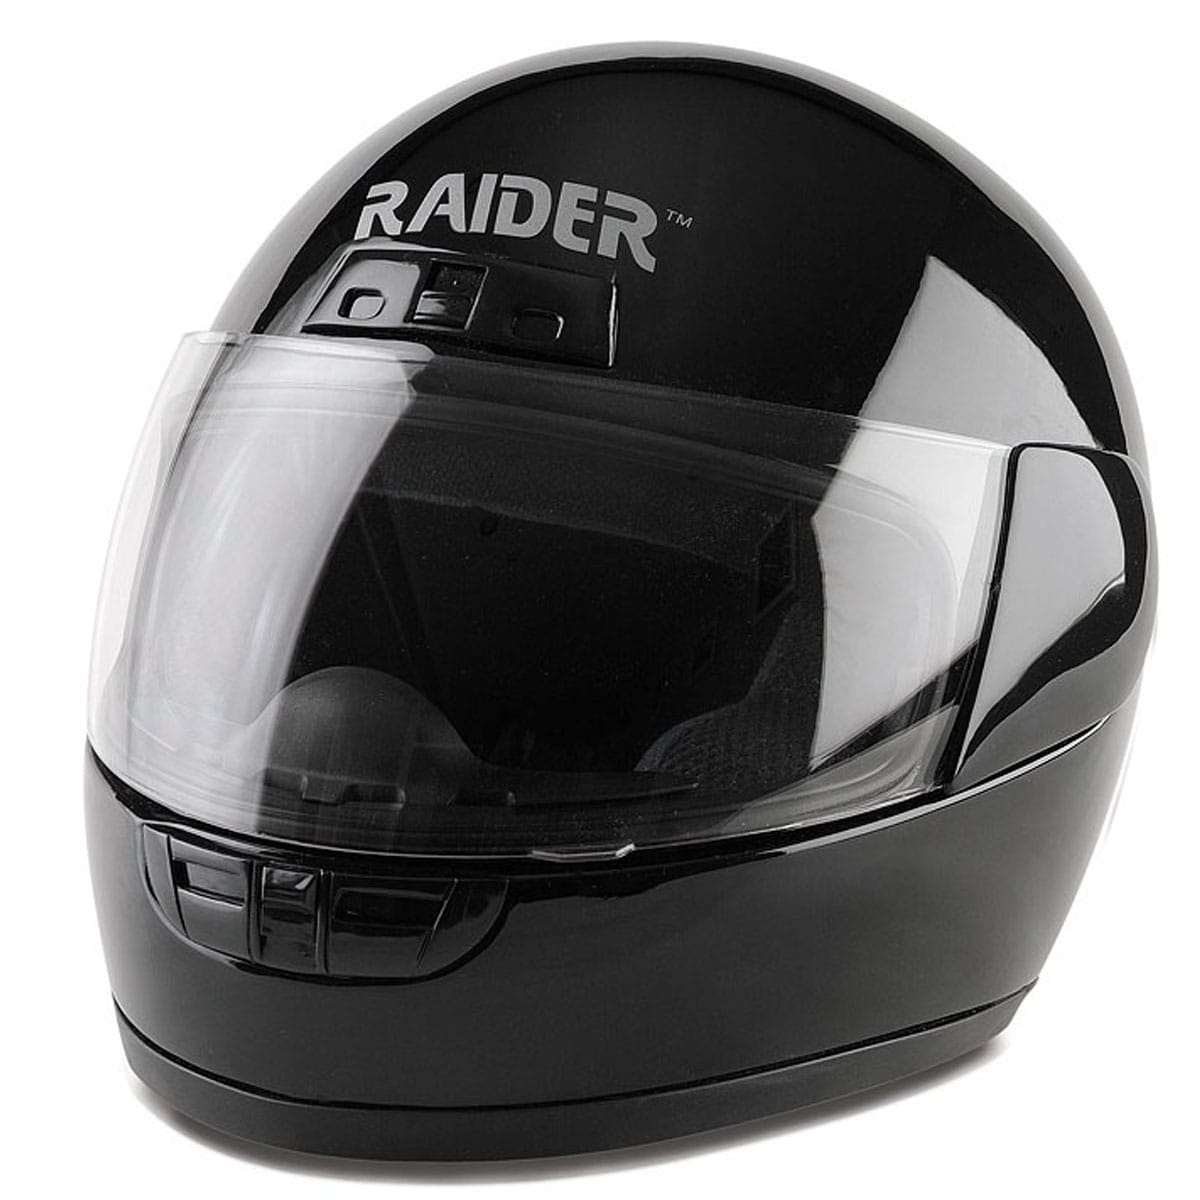 Black Thermoplastic Raider Youth Full-face Motorcycle Street Helmet